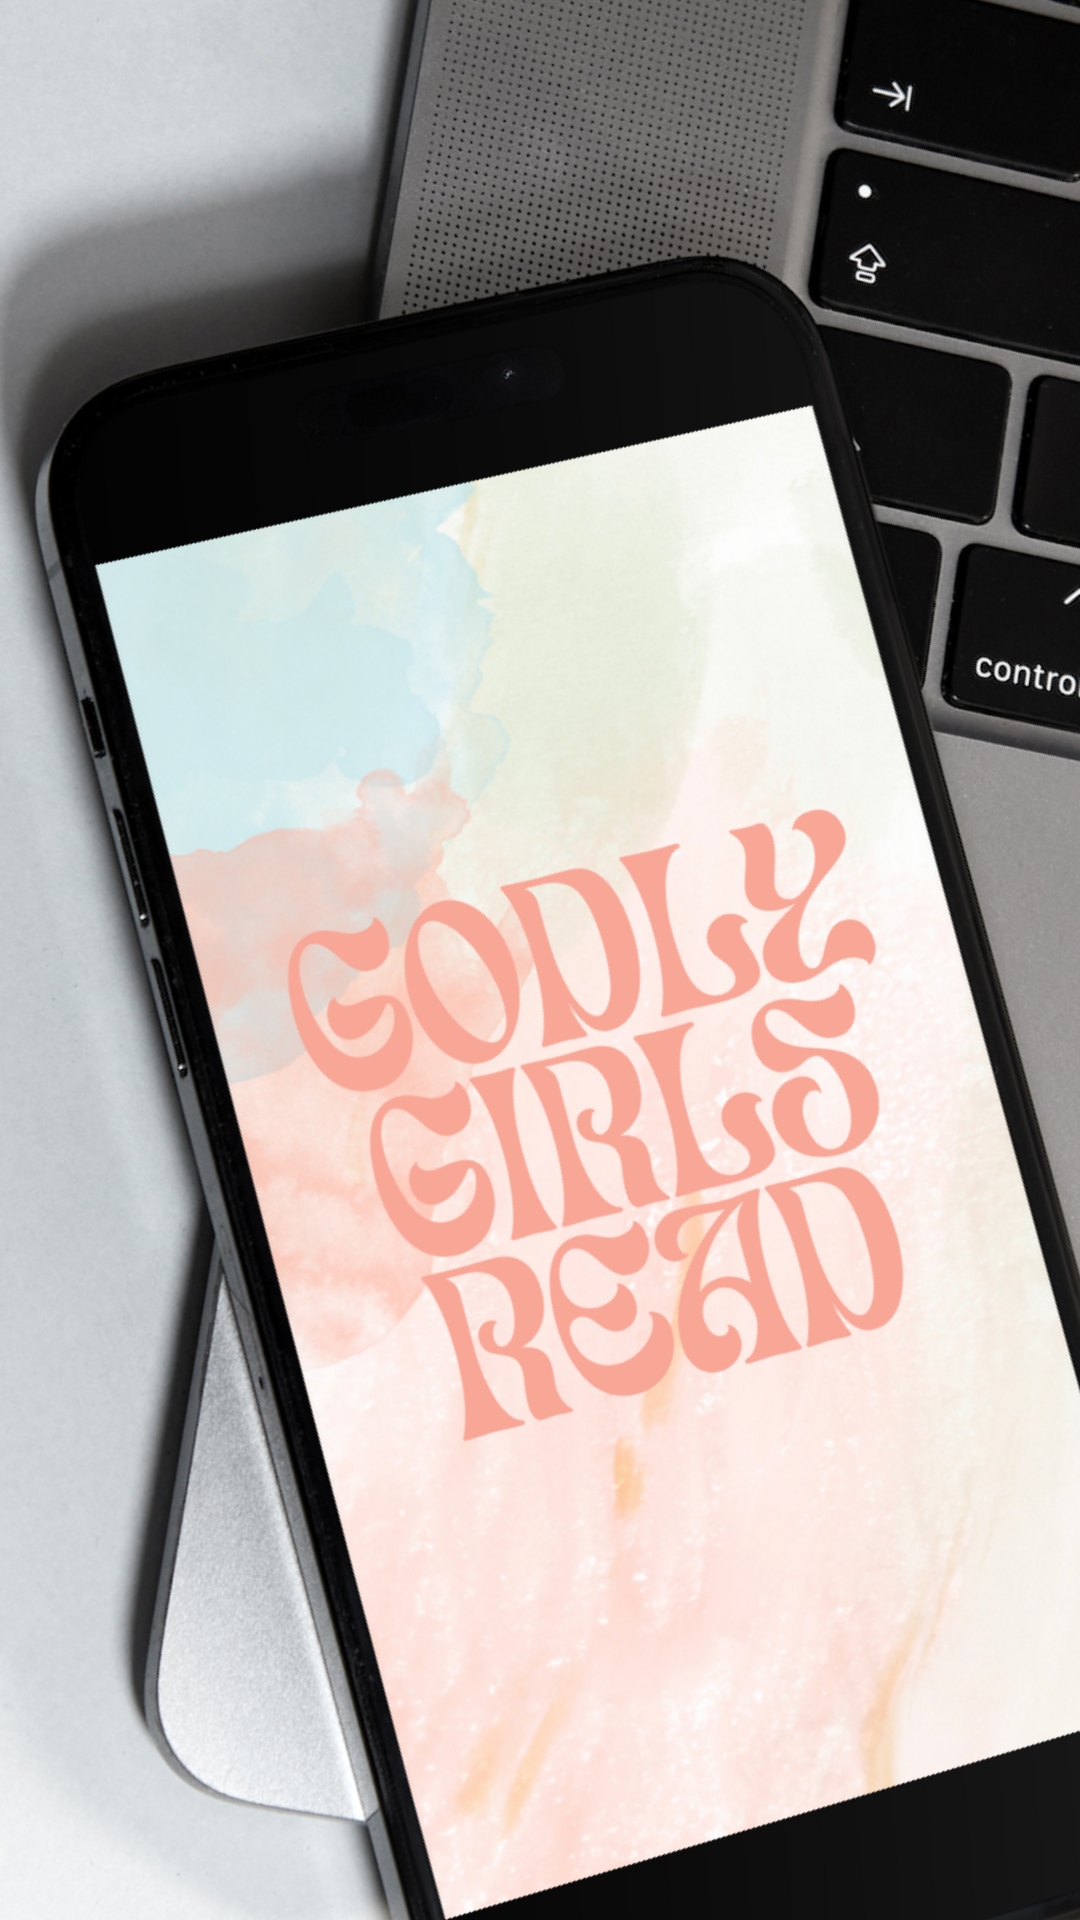 Godly Girls Read (Digital Download)